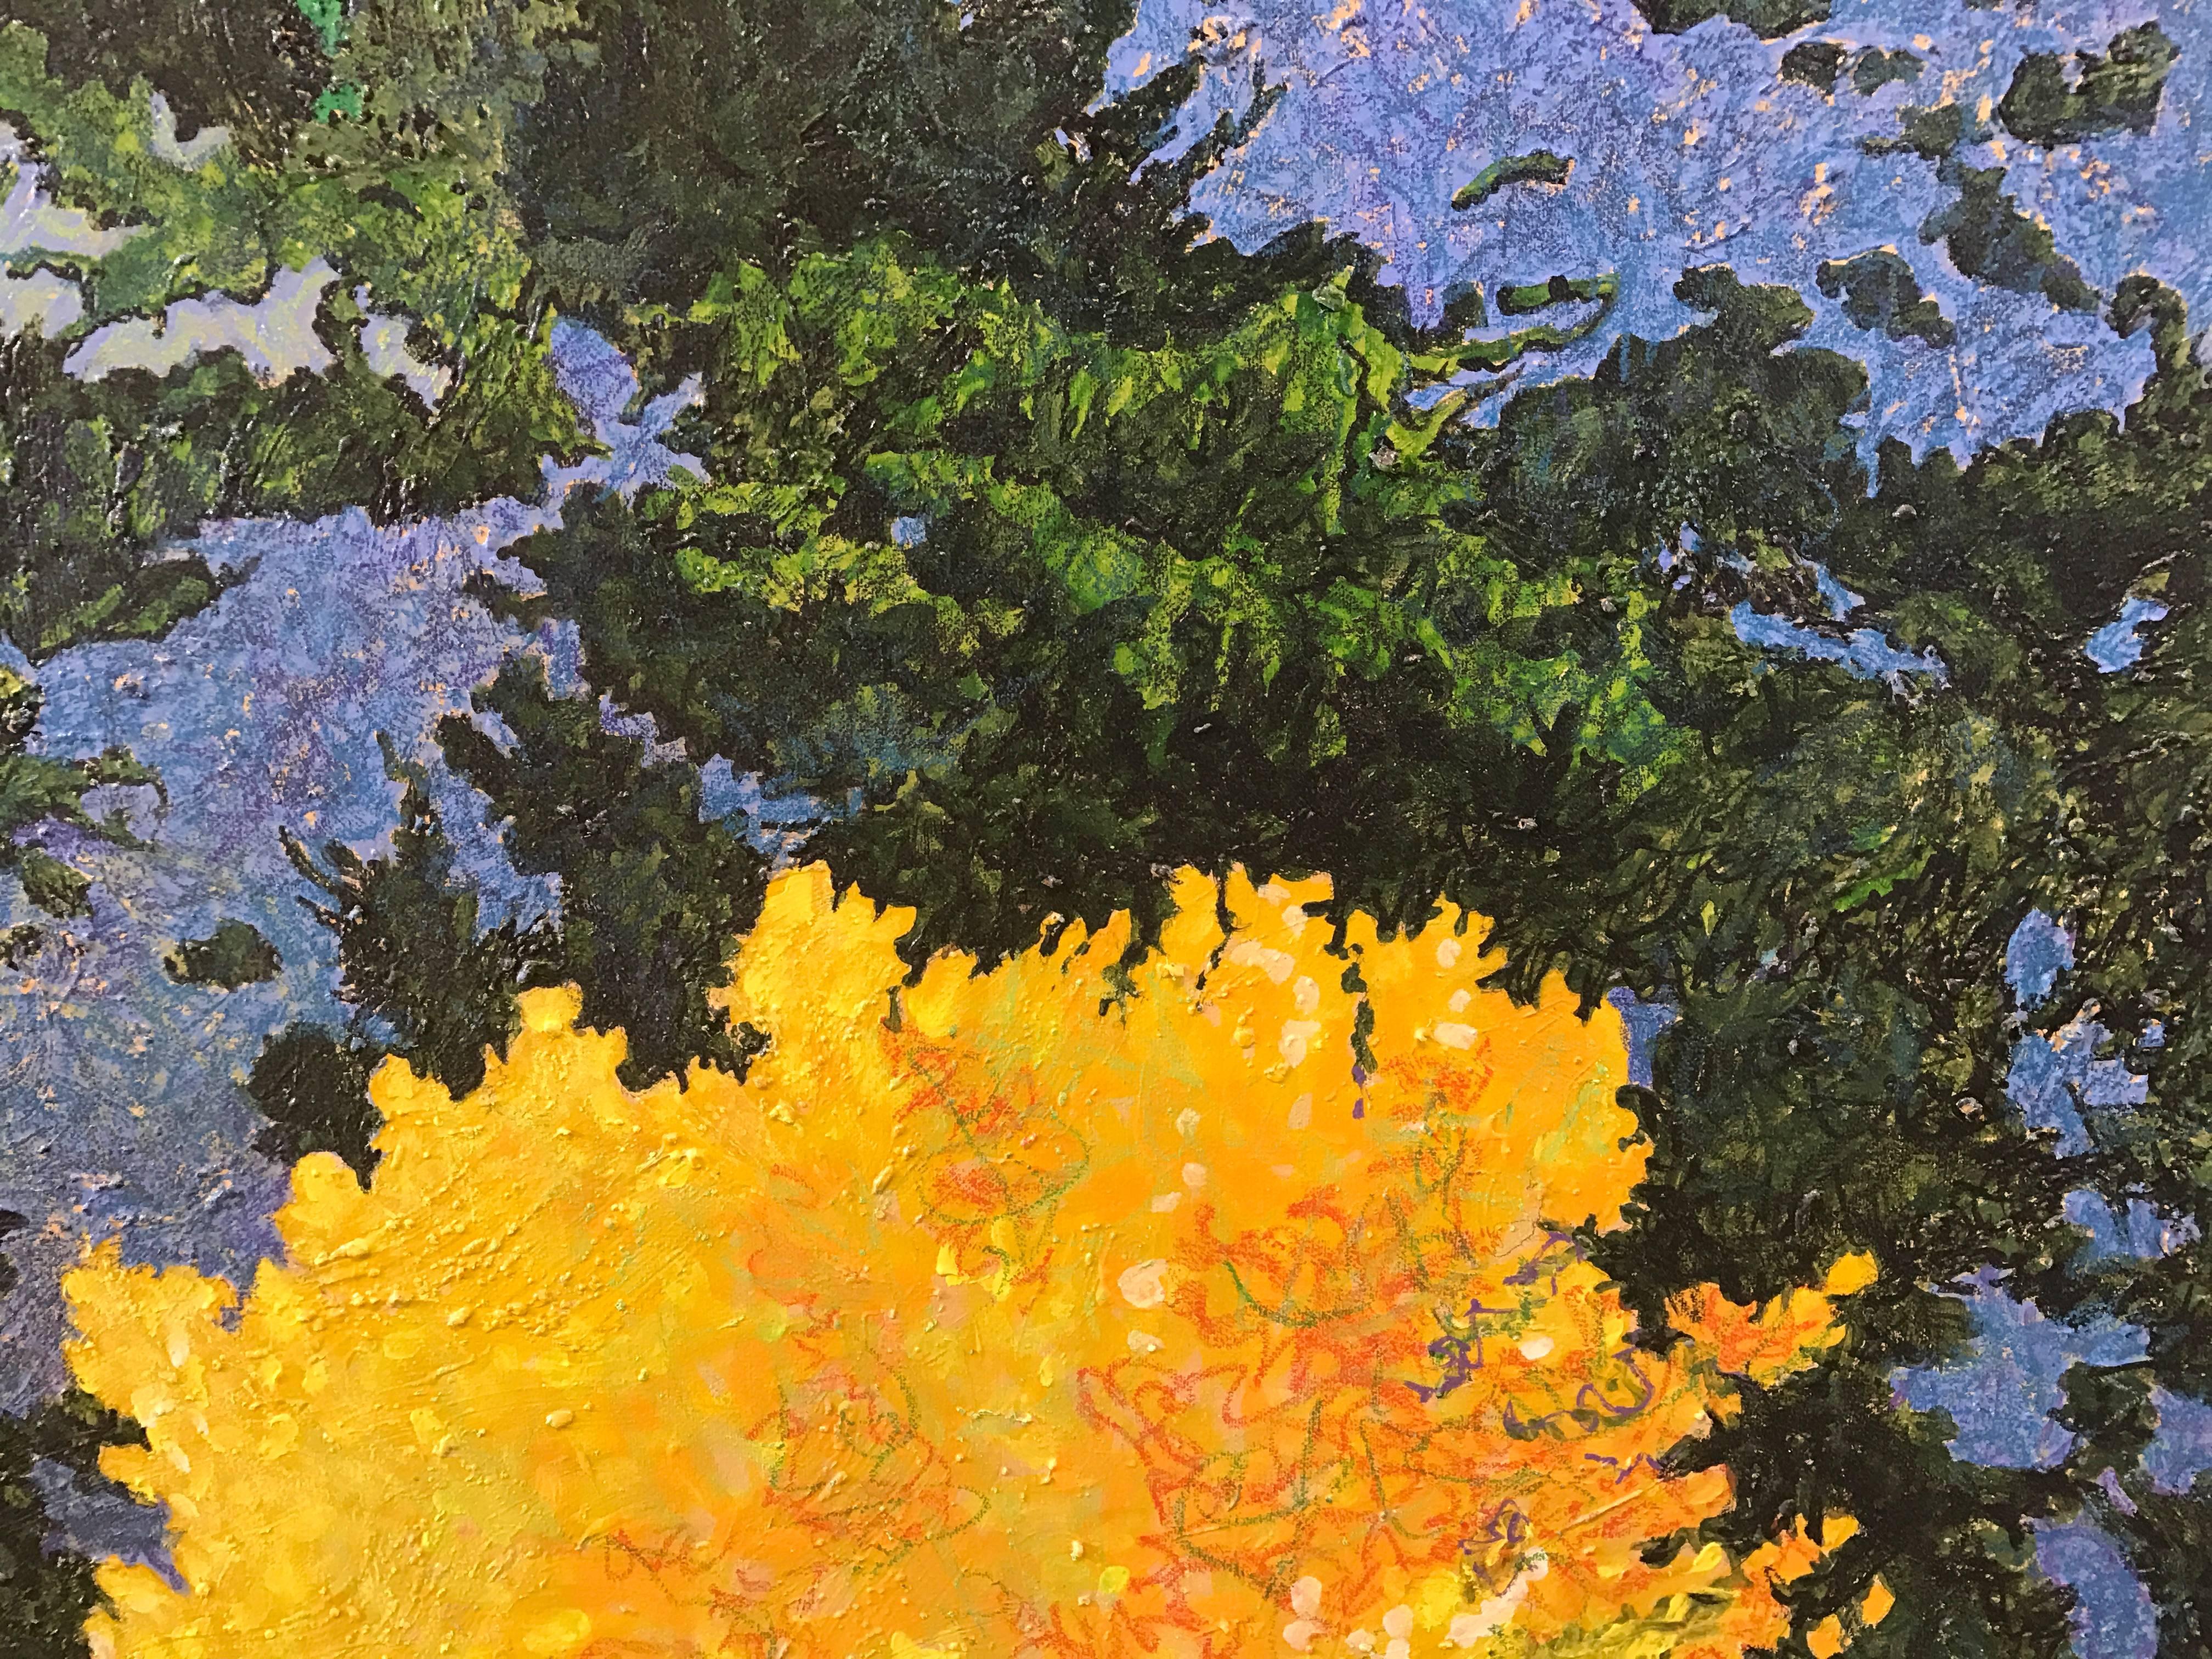 Sunlight Cottonwood, desert landscape painting, canvas, yellow, blue, green, Santa Fe - Painting by John Hogan